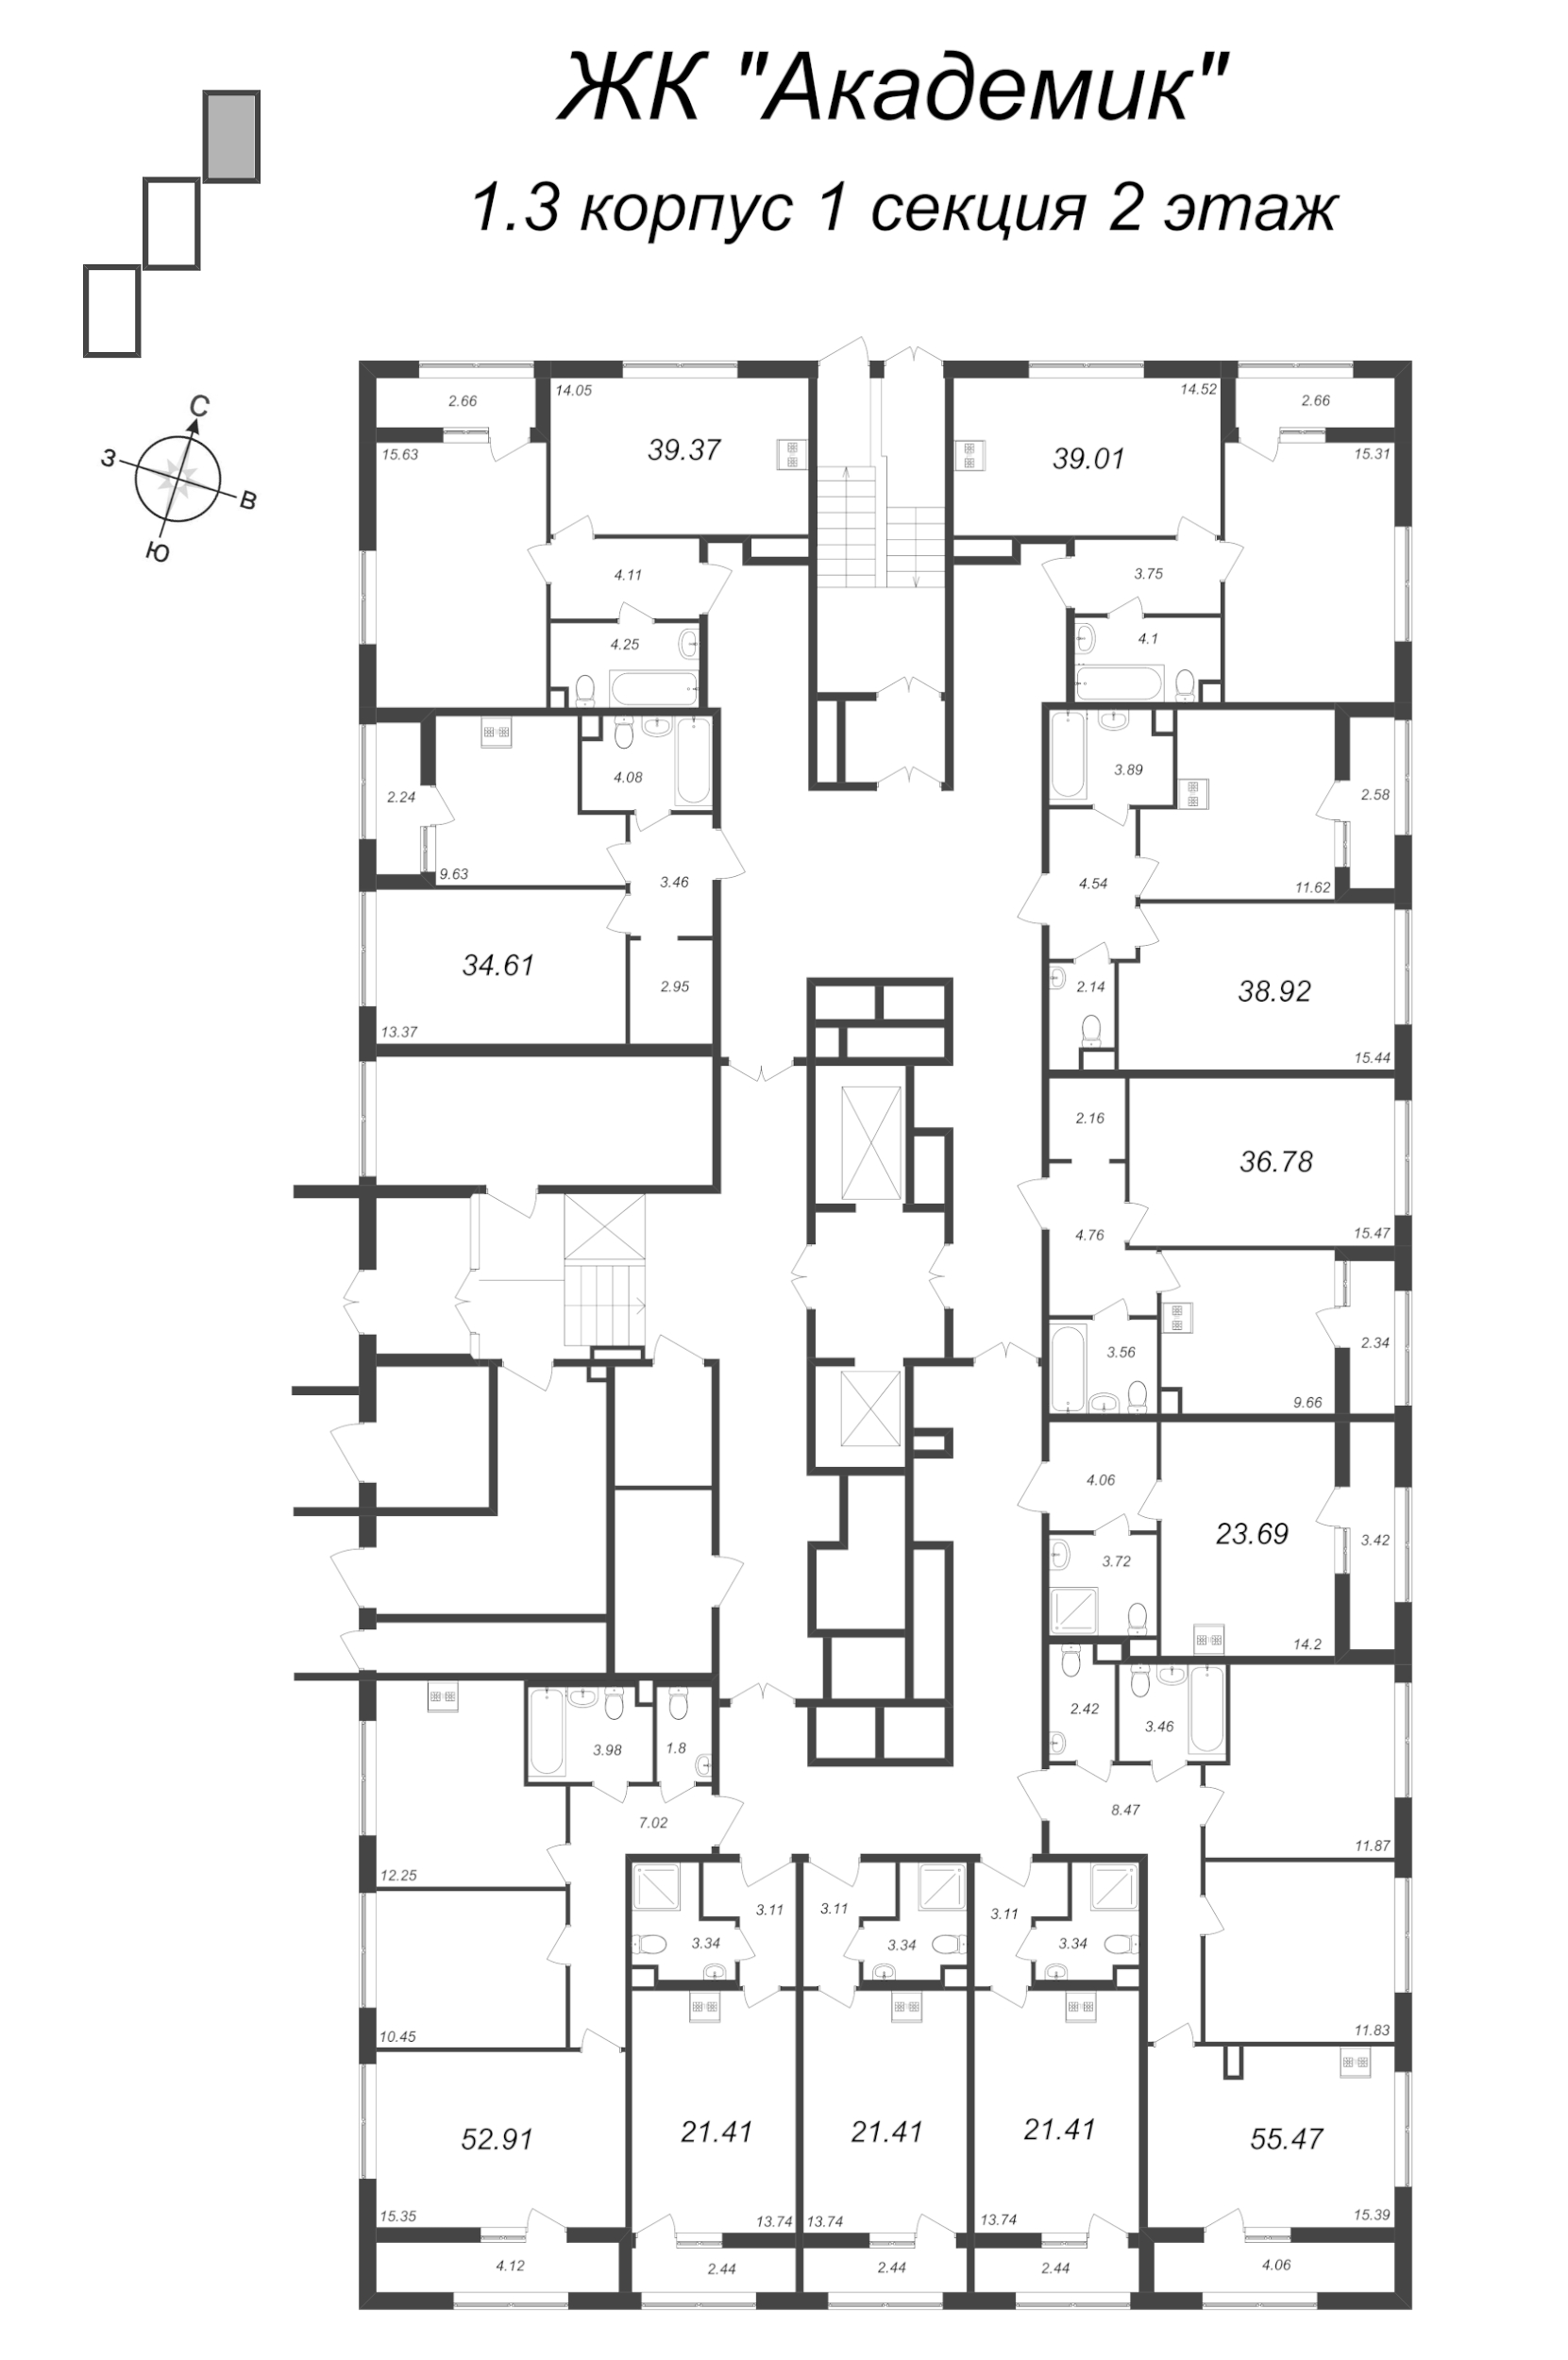 3-комнатная (Евро) квартира, 55.47 м² - планировка этажа